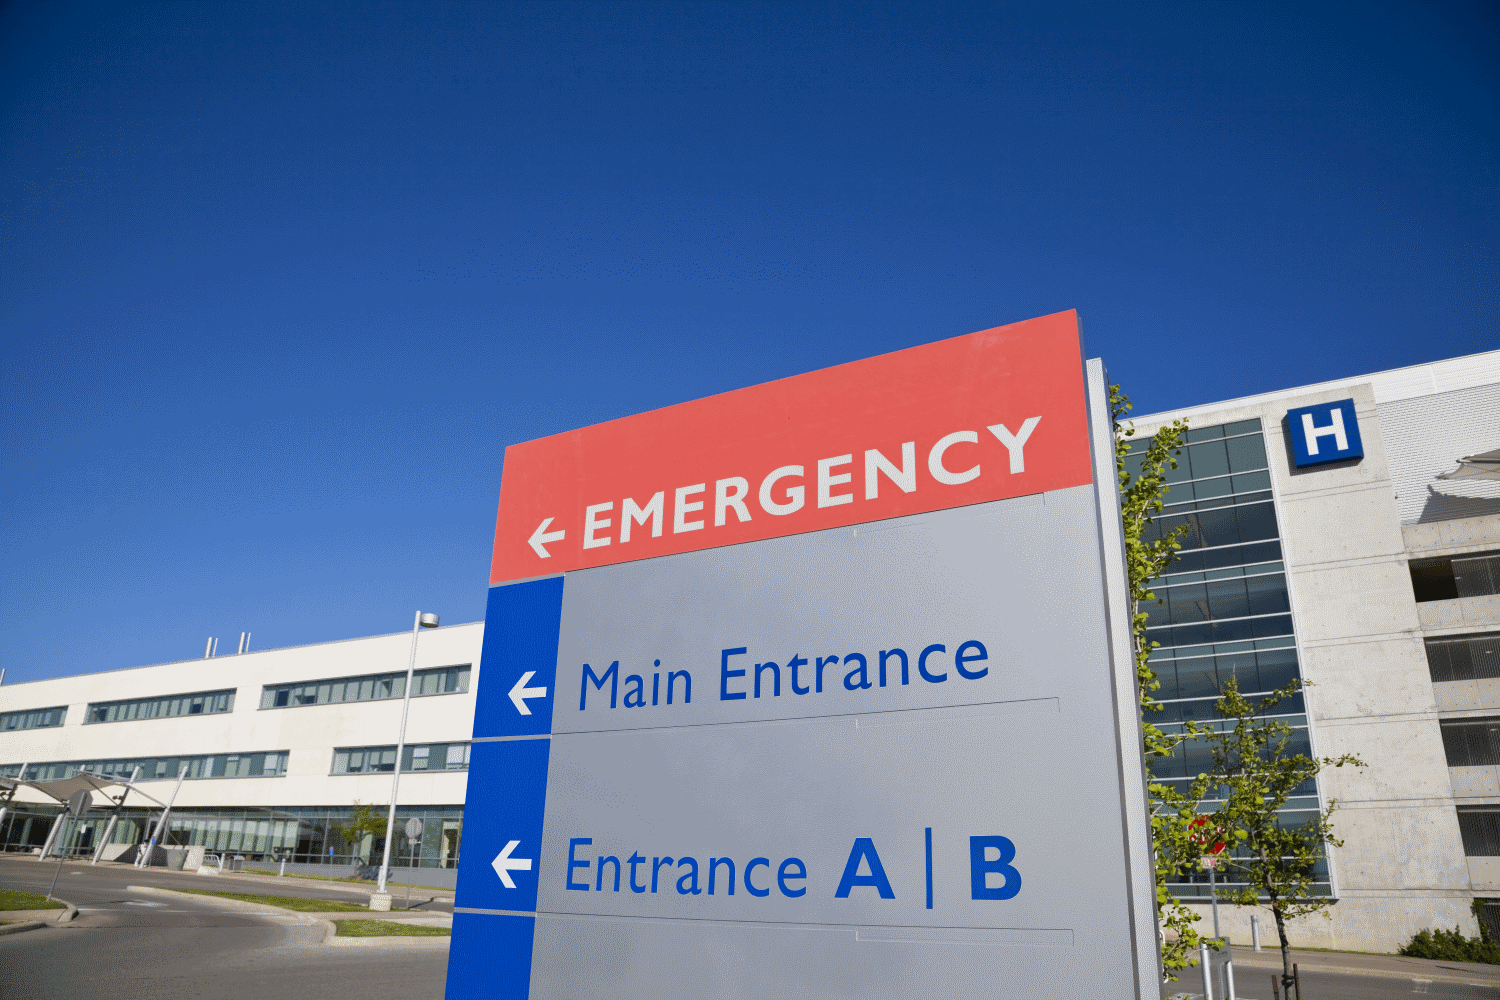 Hospital Emergency sign